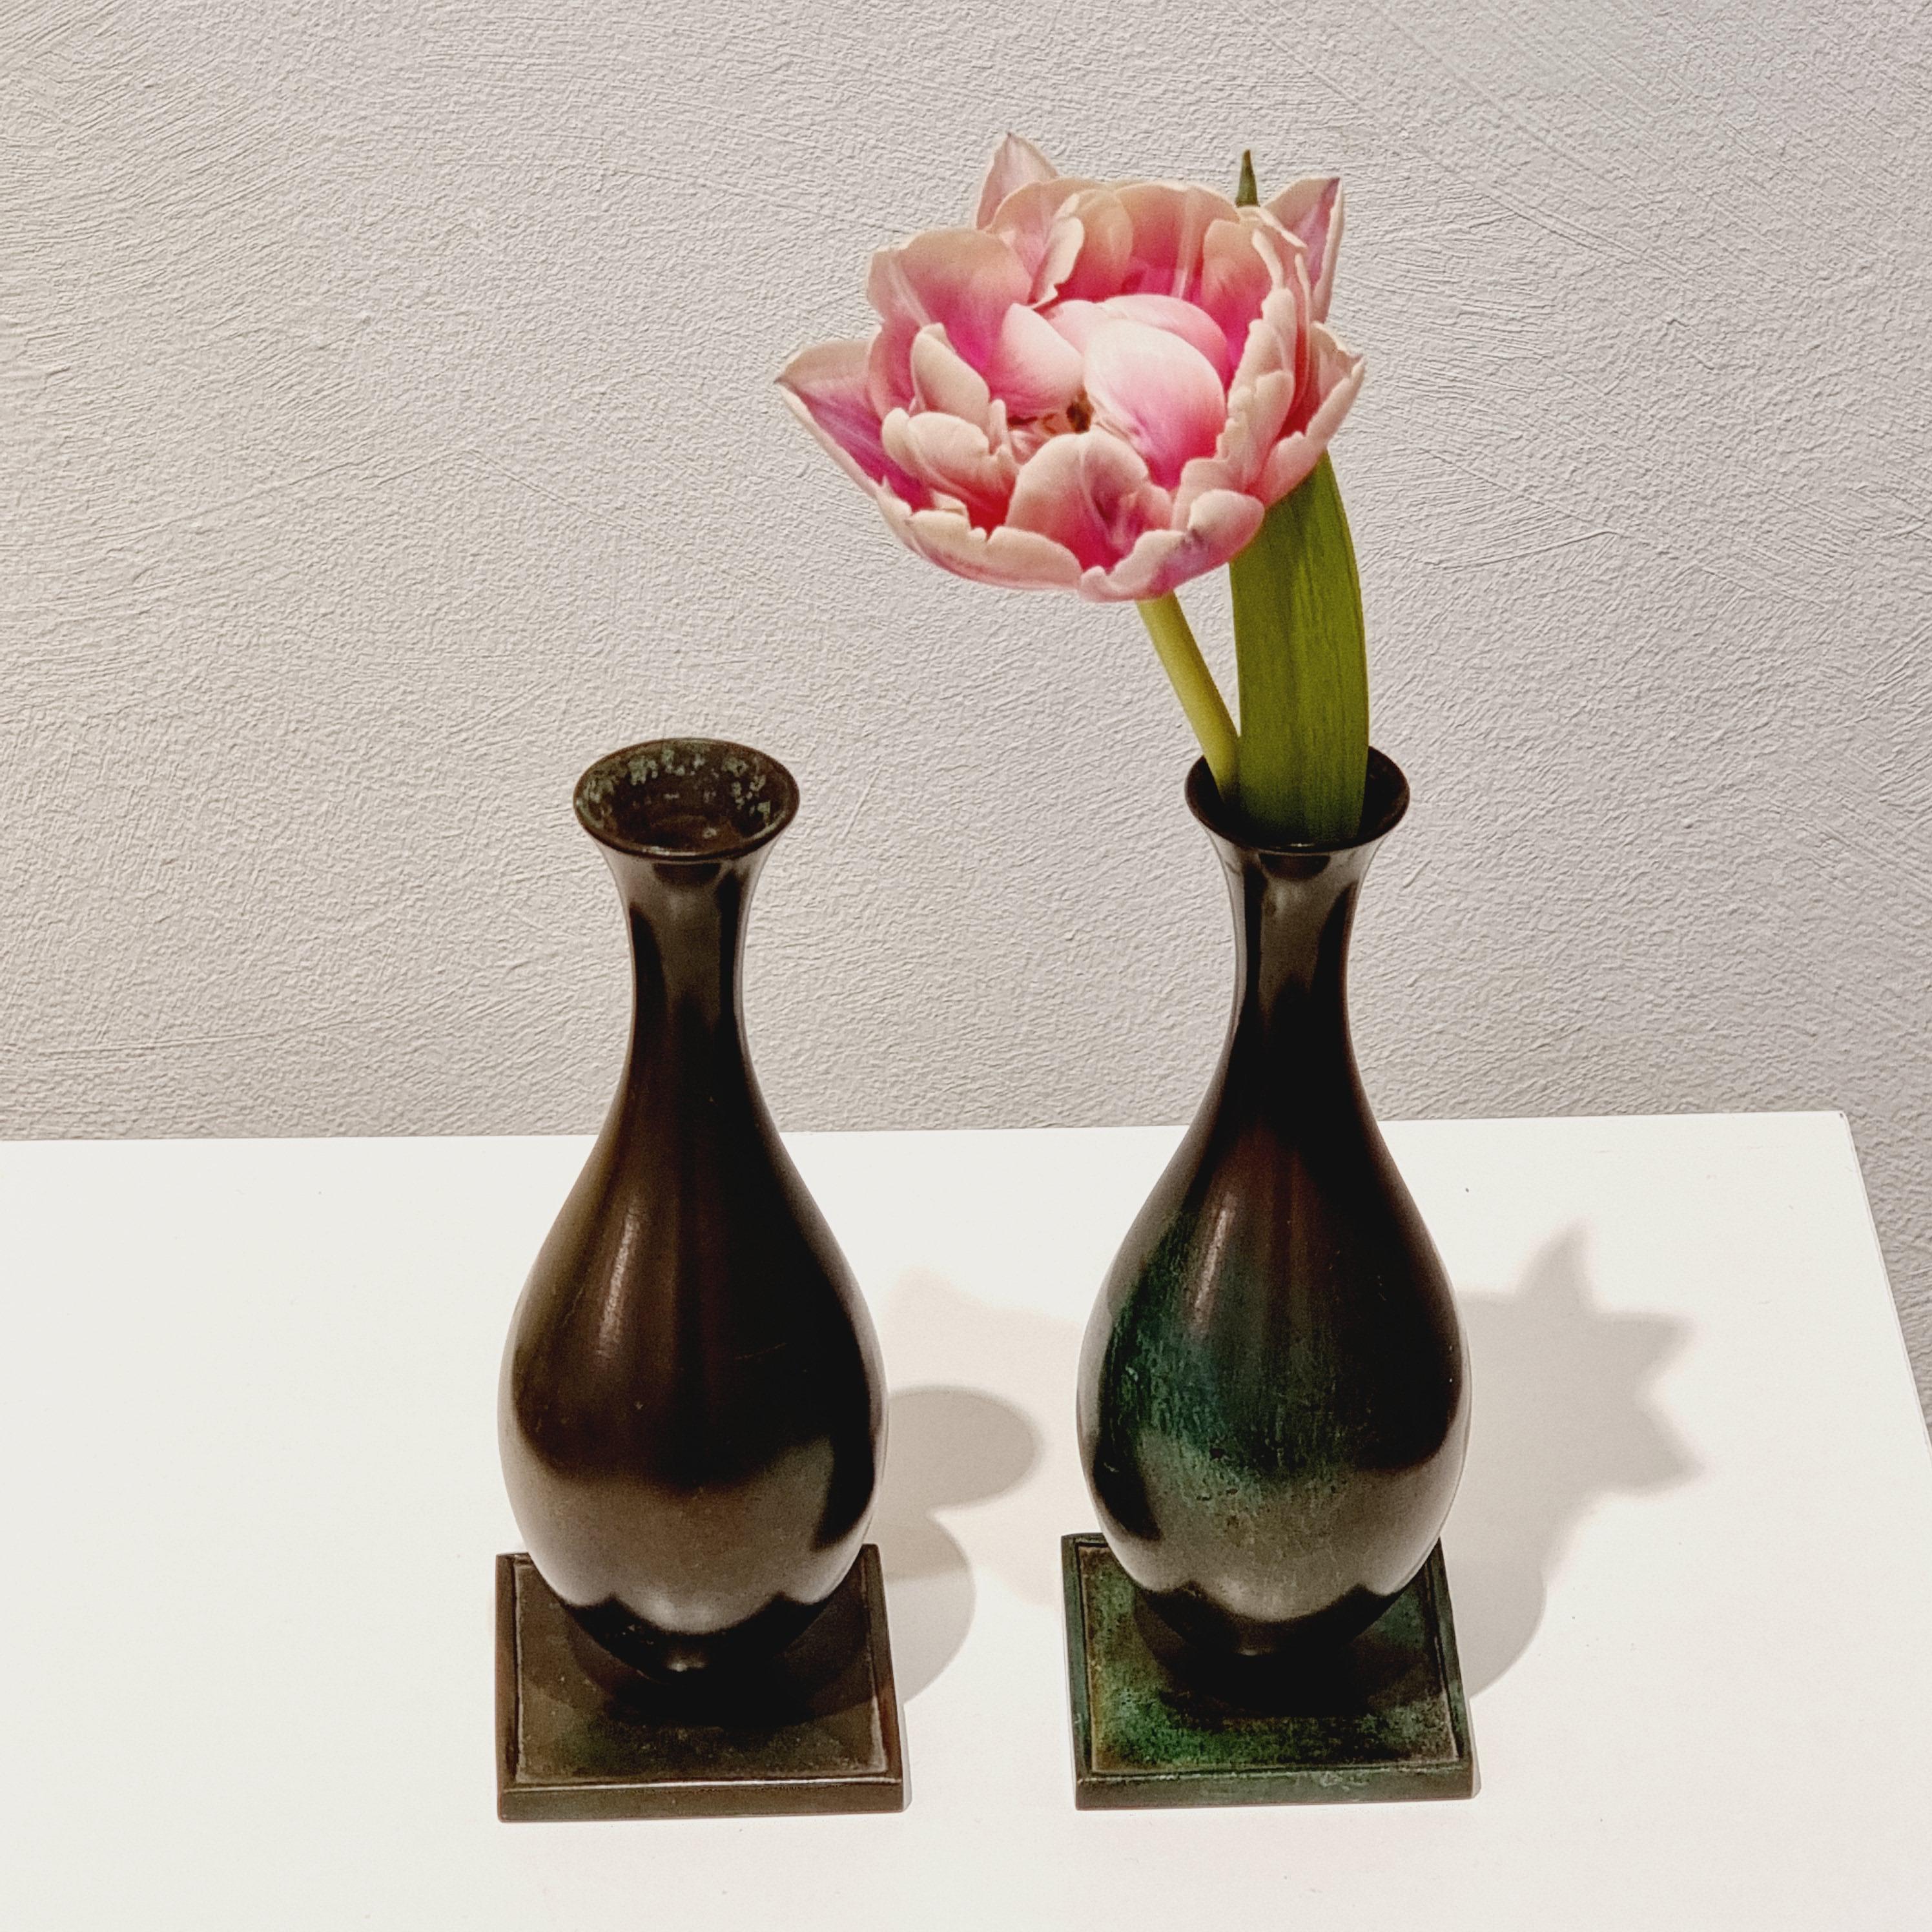 A set of two vases in  solid bronxe by Jacob Ängman för Guldaktiebolageg (1930-tal)

